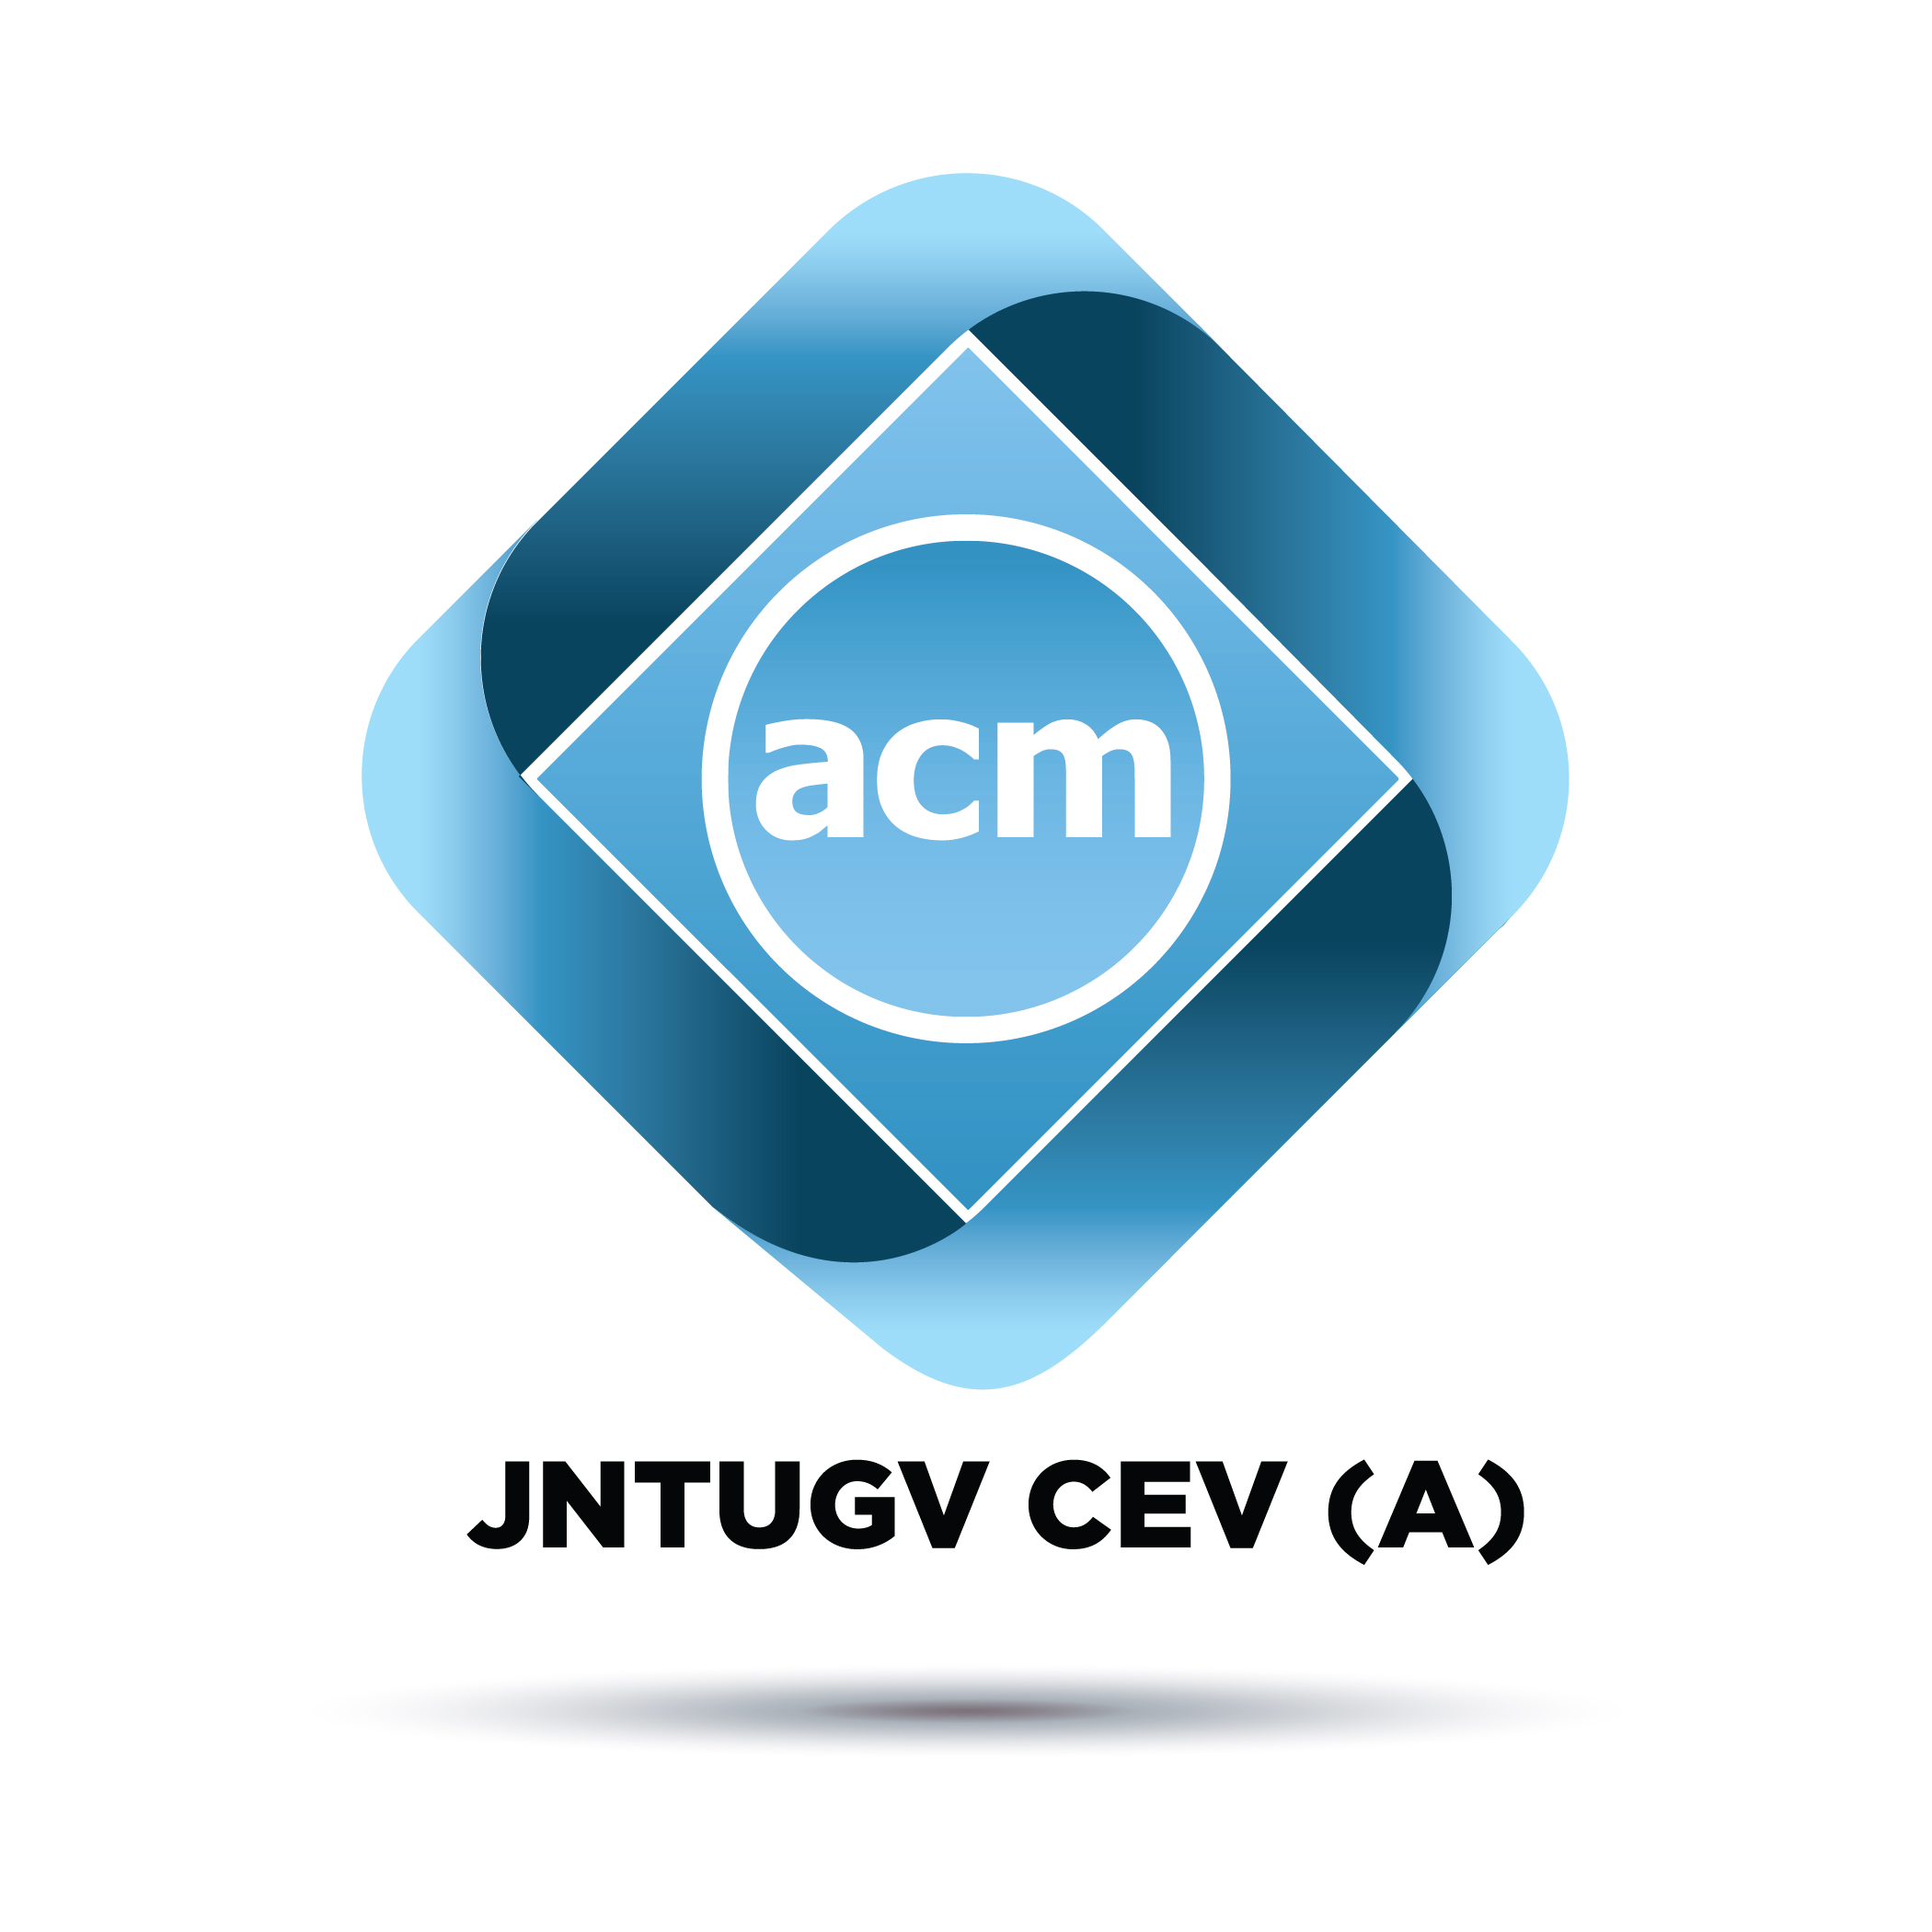 ACM Student Branch JNTUGV CEV